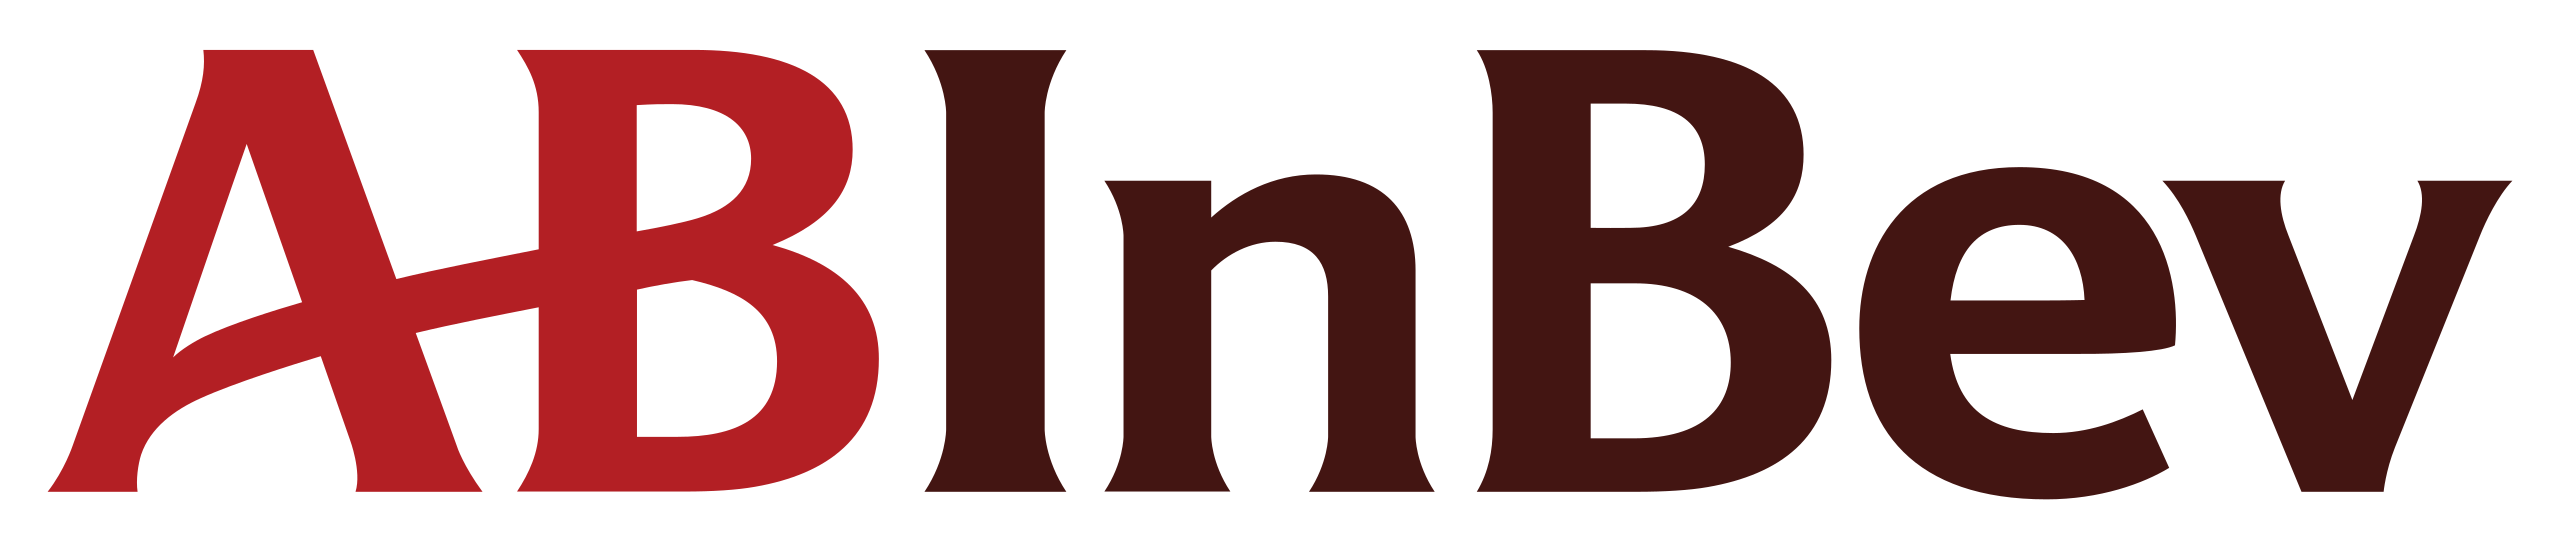 Anheuser-Busch_InBev_text_logo